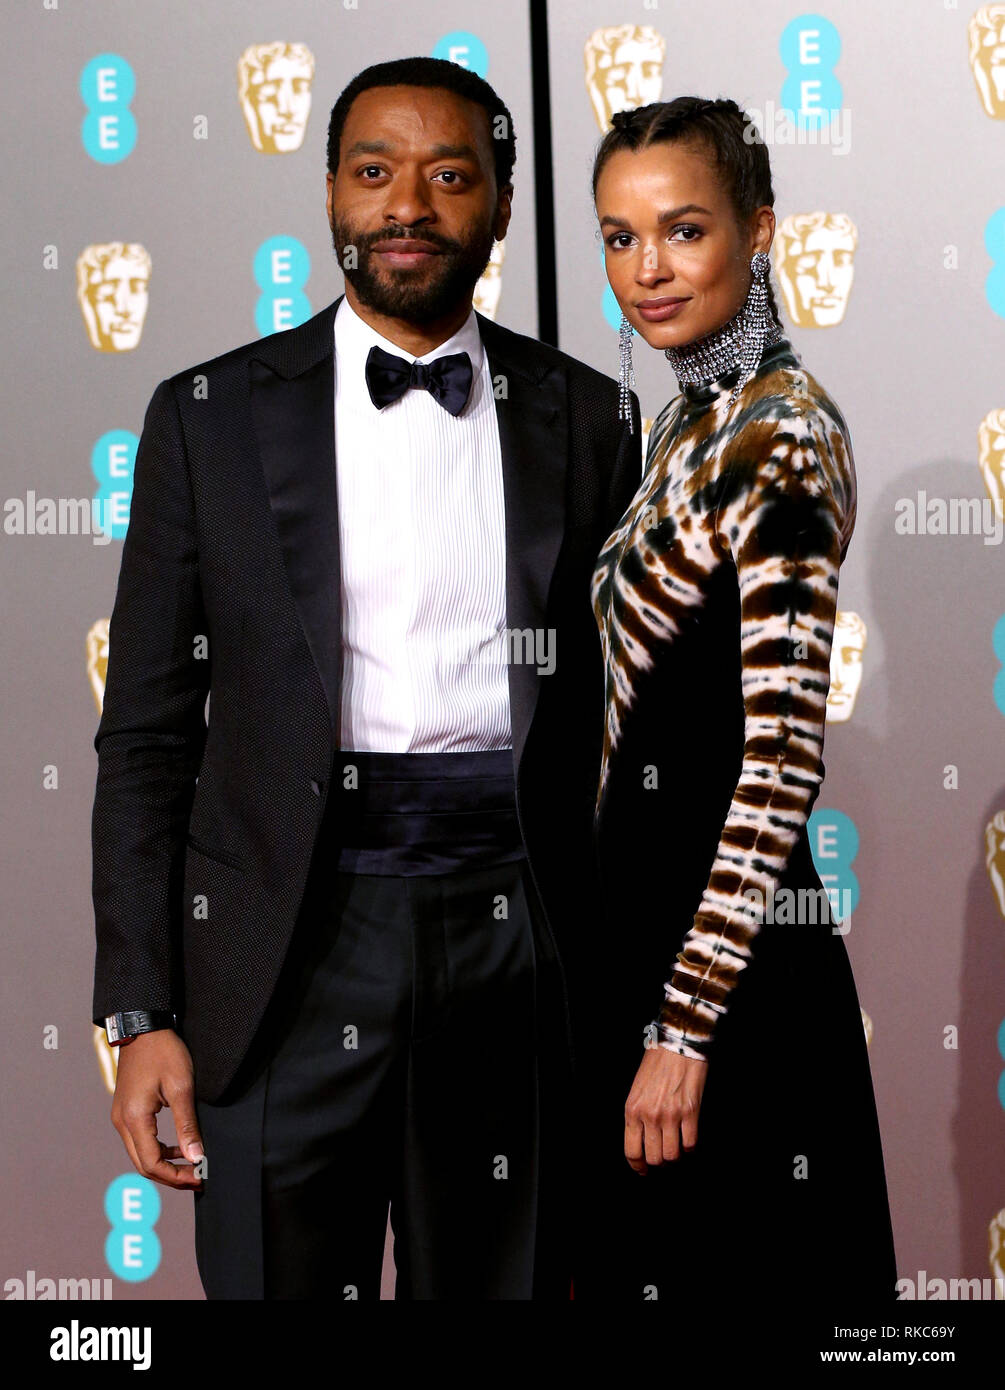 Chiwetel Ejiofor and Frances Aaternir attending the 72nd British Academy Film Awards held at the Royal Albert Hall, Kensington Gore, Kensington, London. Stock Photo